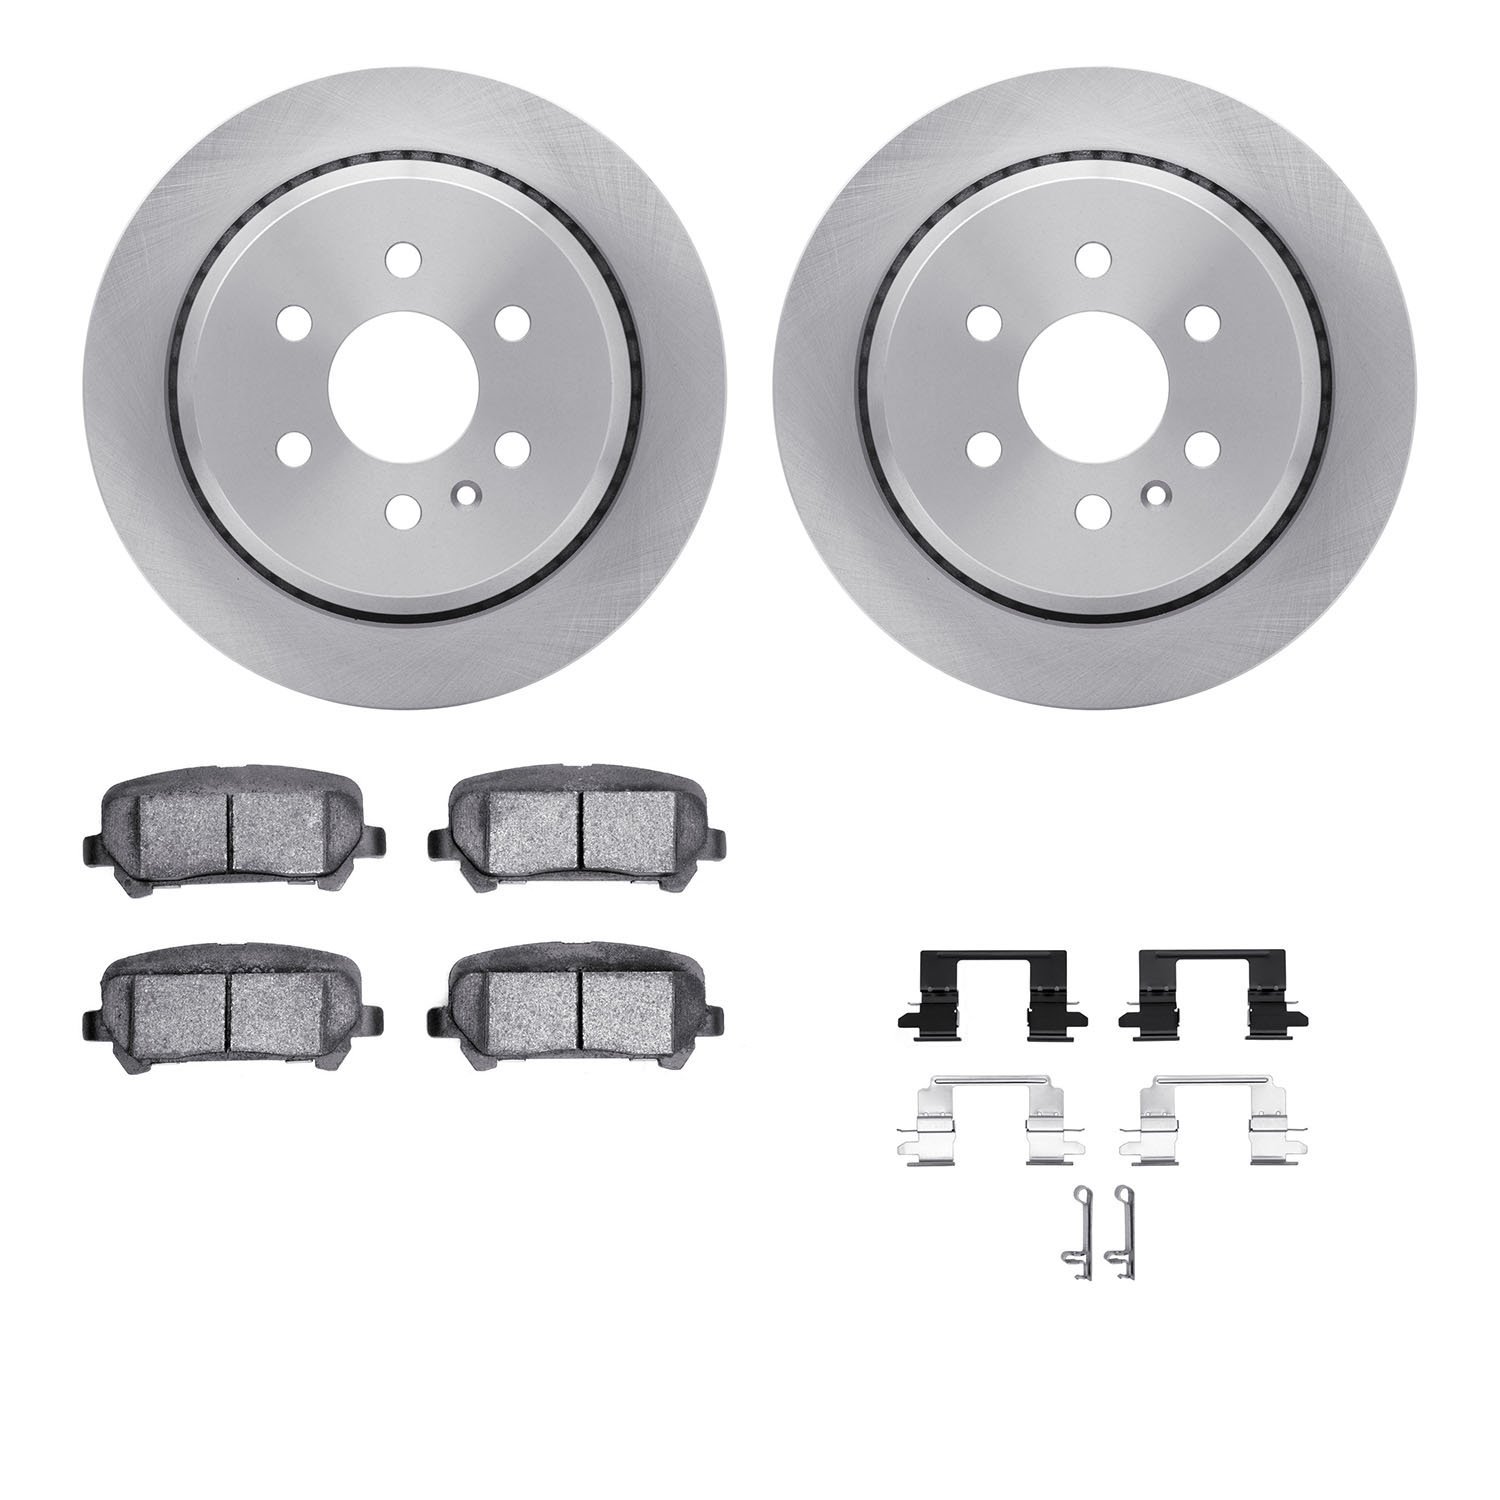 6412-48139 Brake Rotors with Ultimate-Duty Brake Pads Kit & Hardware, 2015-2020 GM, Position: Rear